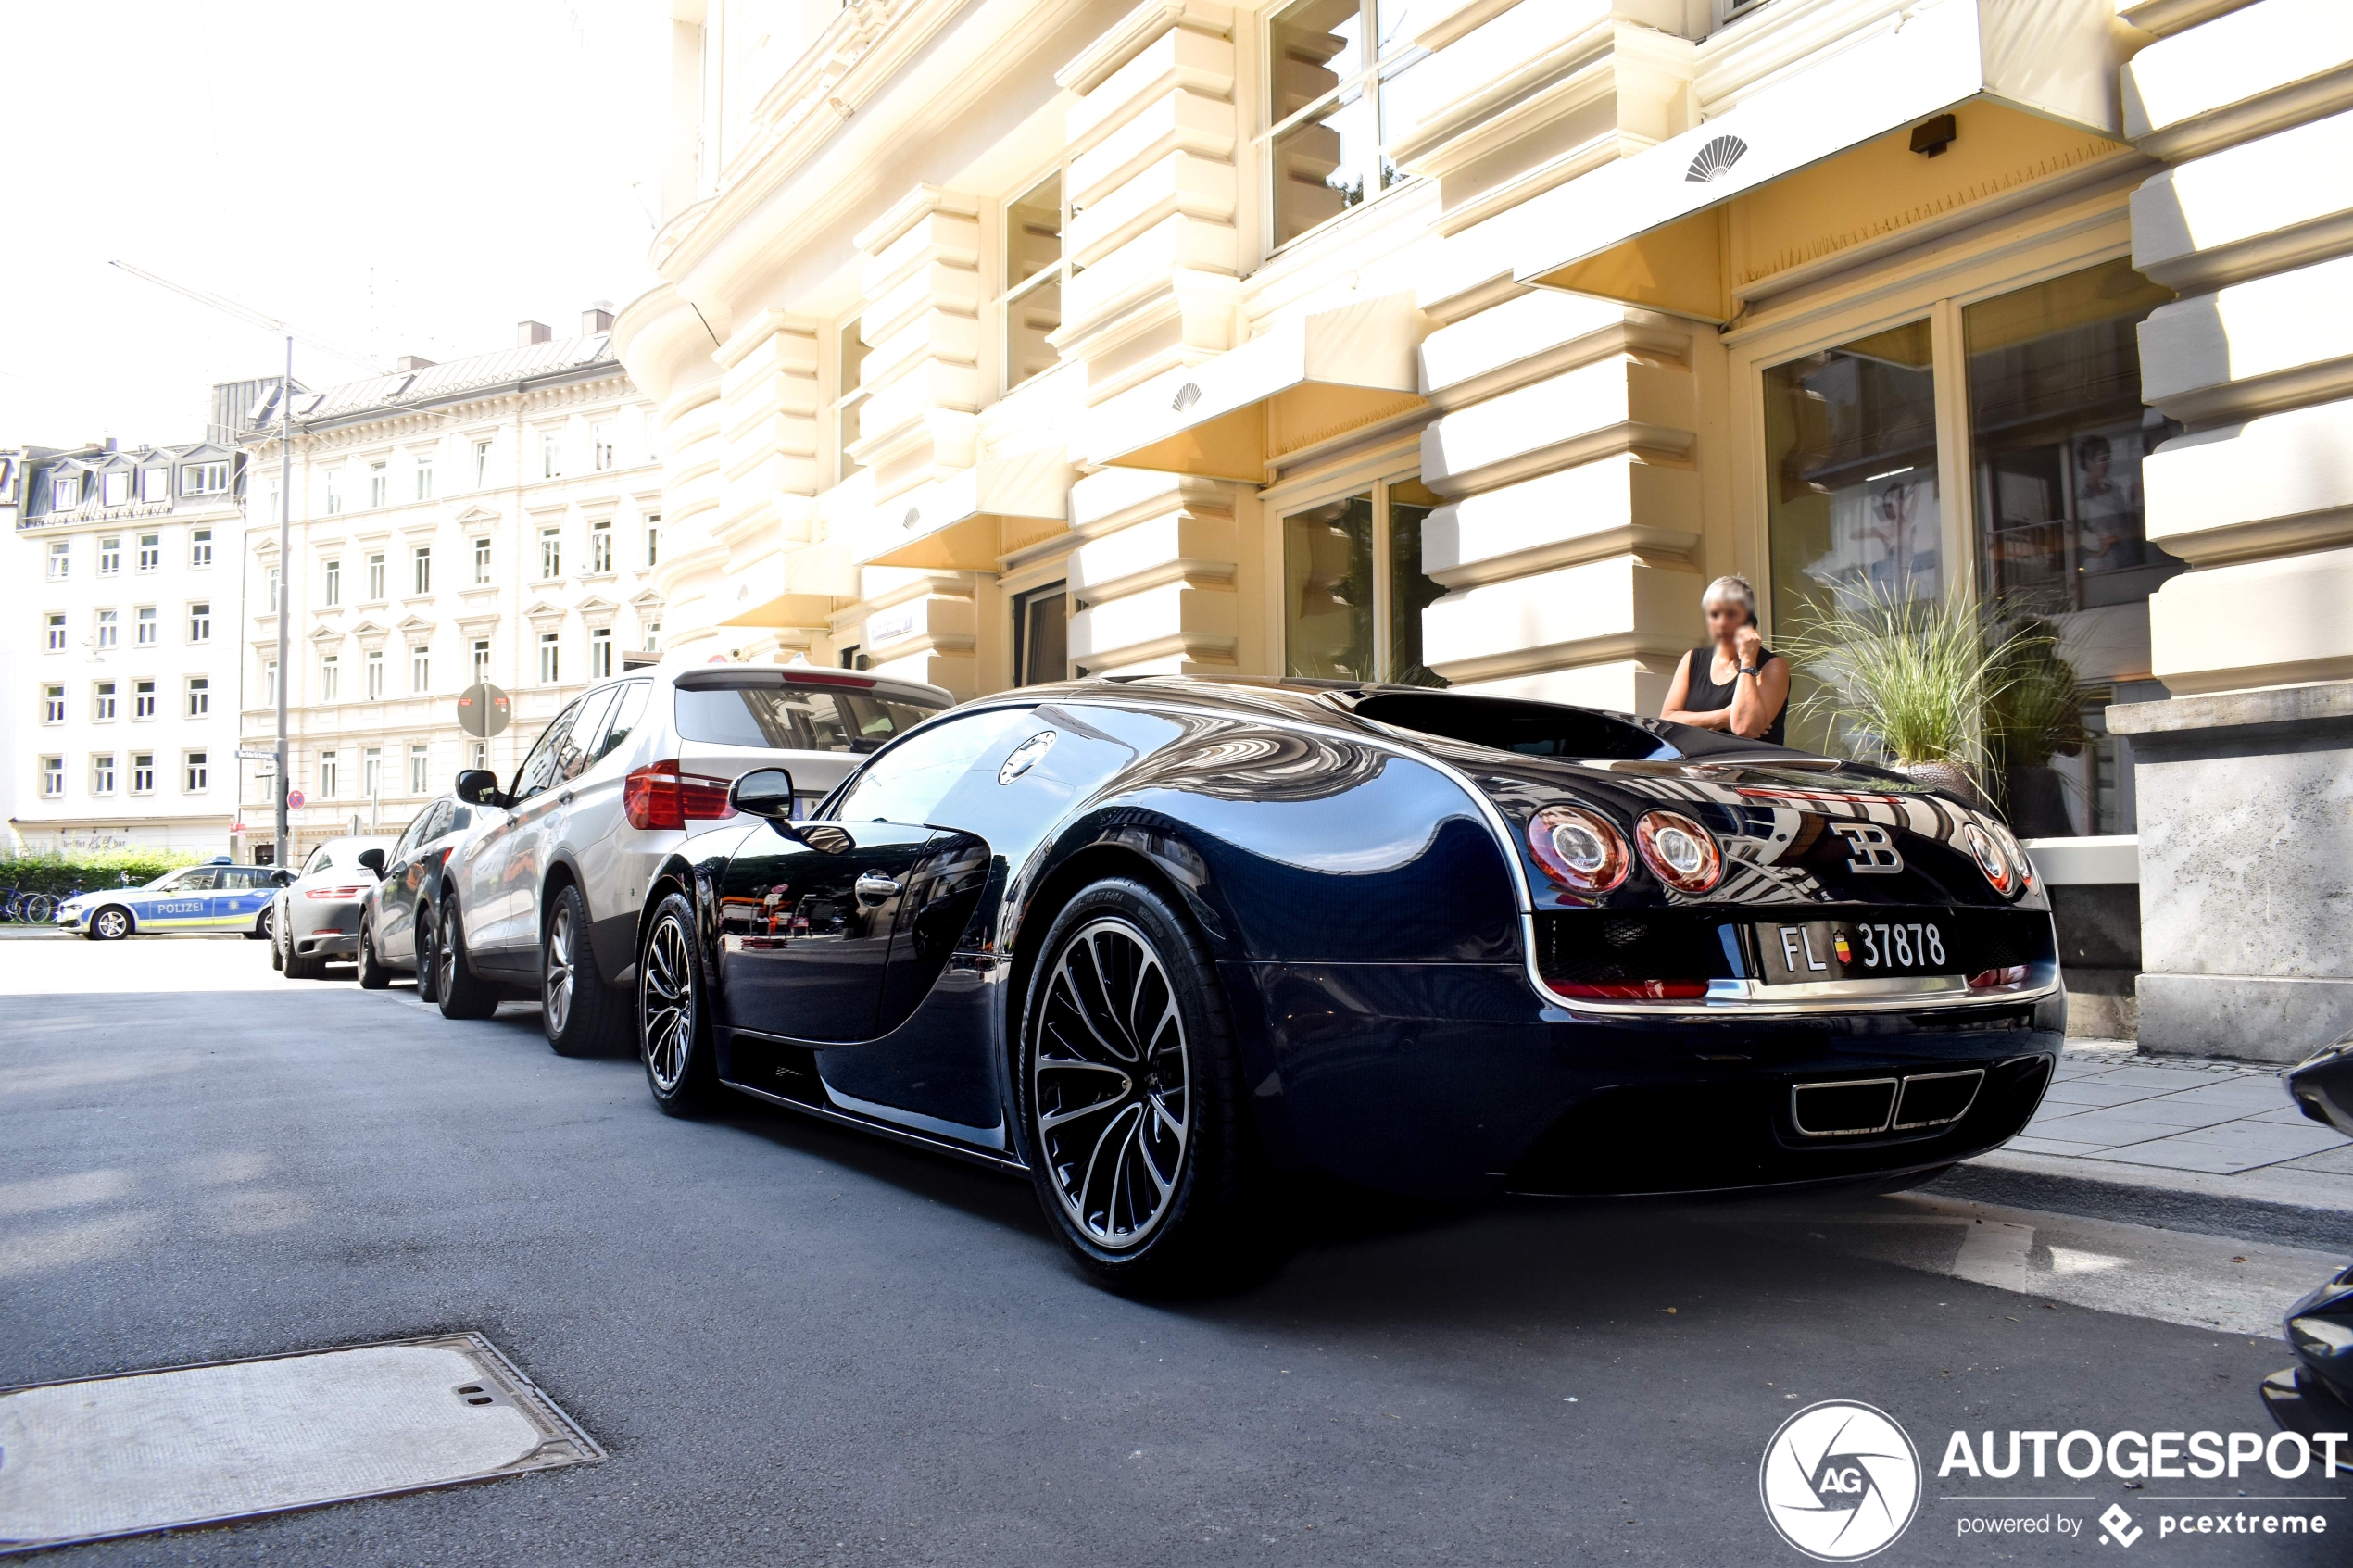 Bugatti Veyron 16.4 Super Sport draagt carbon fiber body met trots